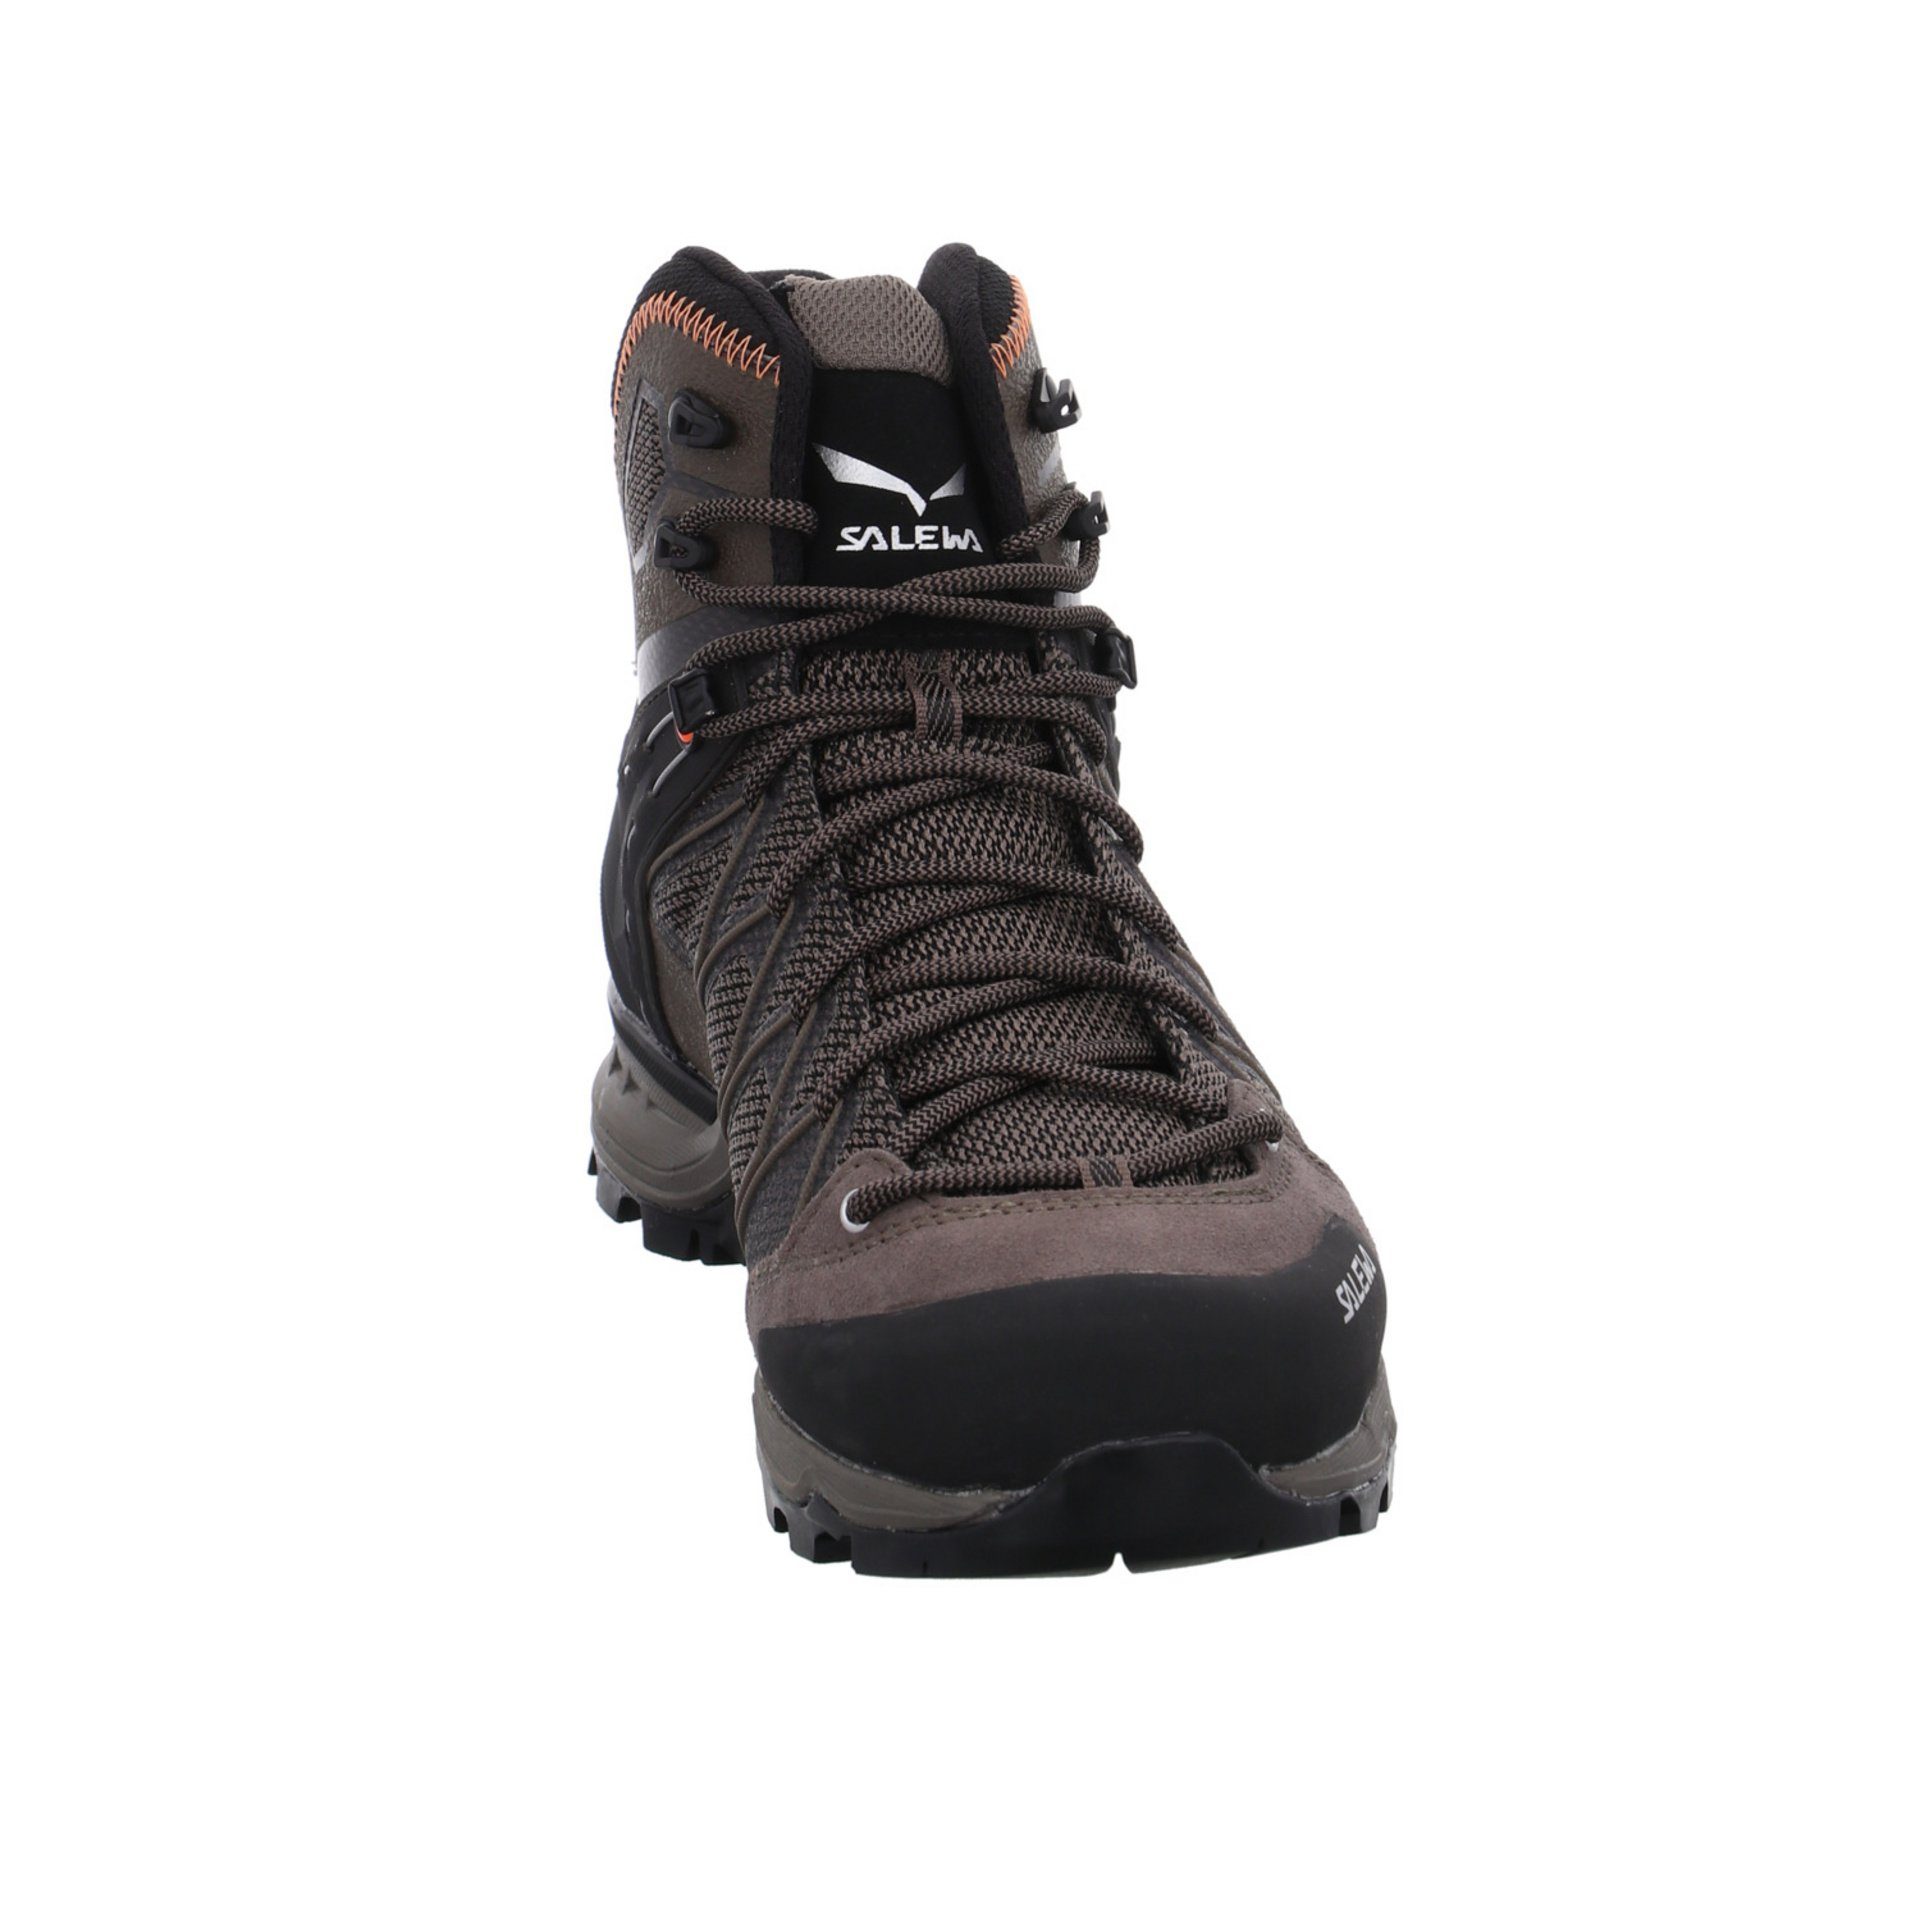 Salewa Herren Cord Brown Bungee Outdoor Black Schuhe Outdoorschuh / Leder-/Textilkombination